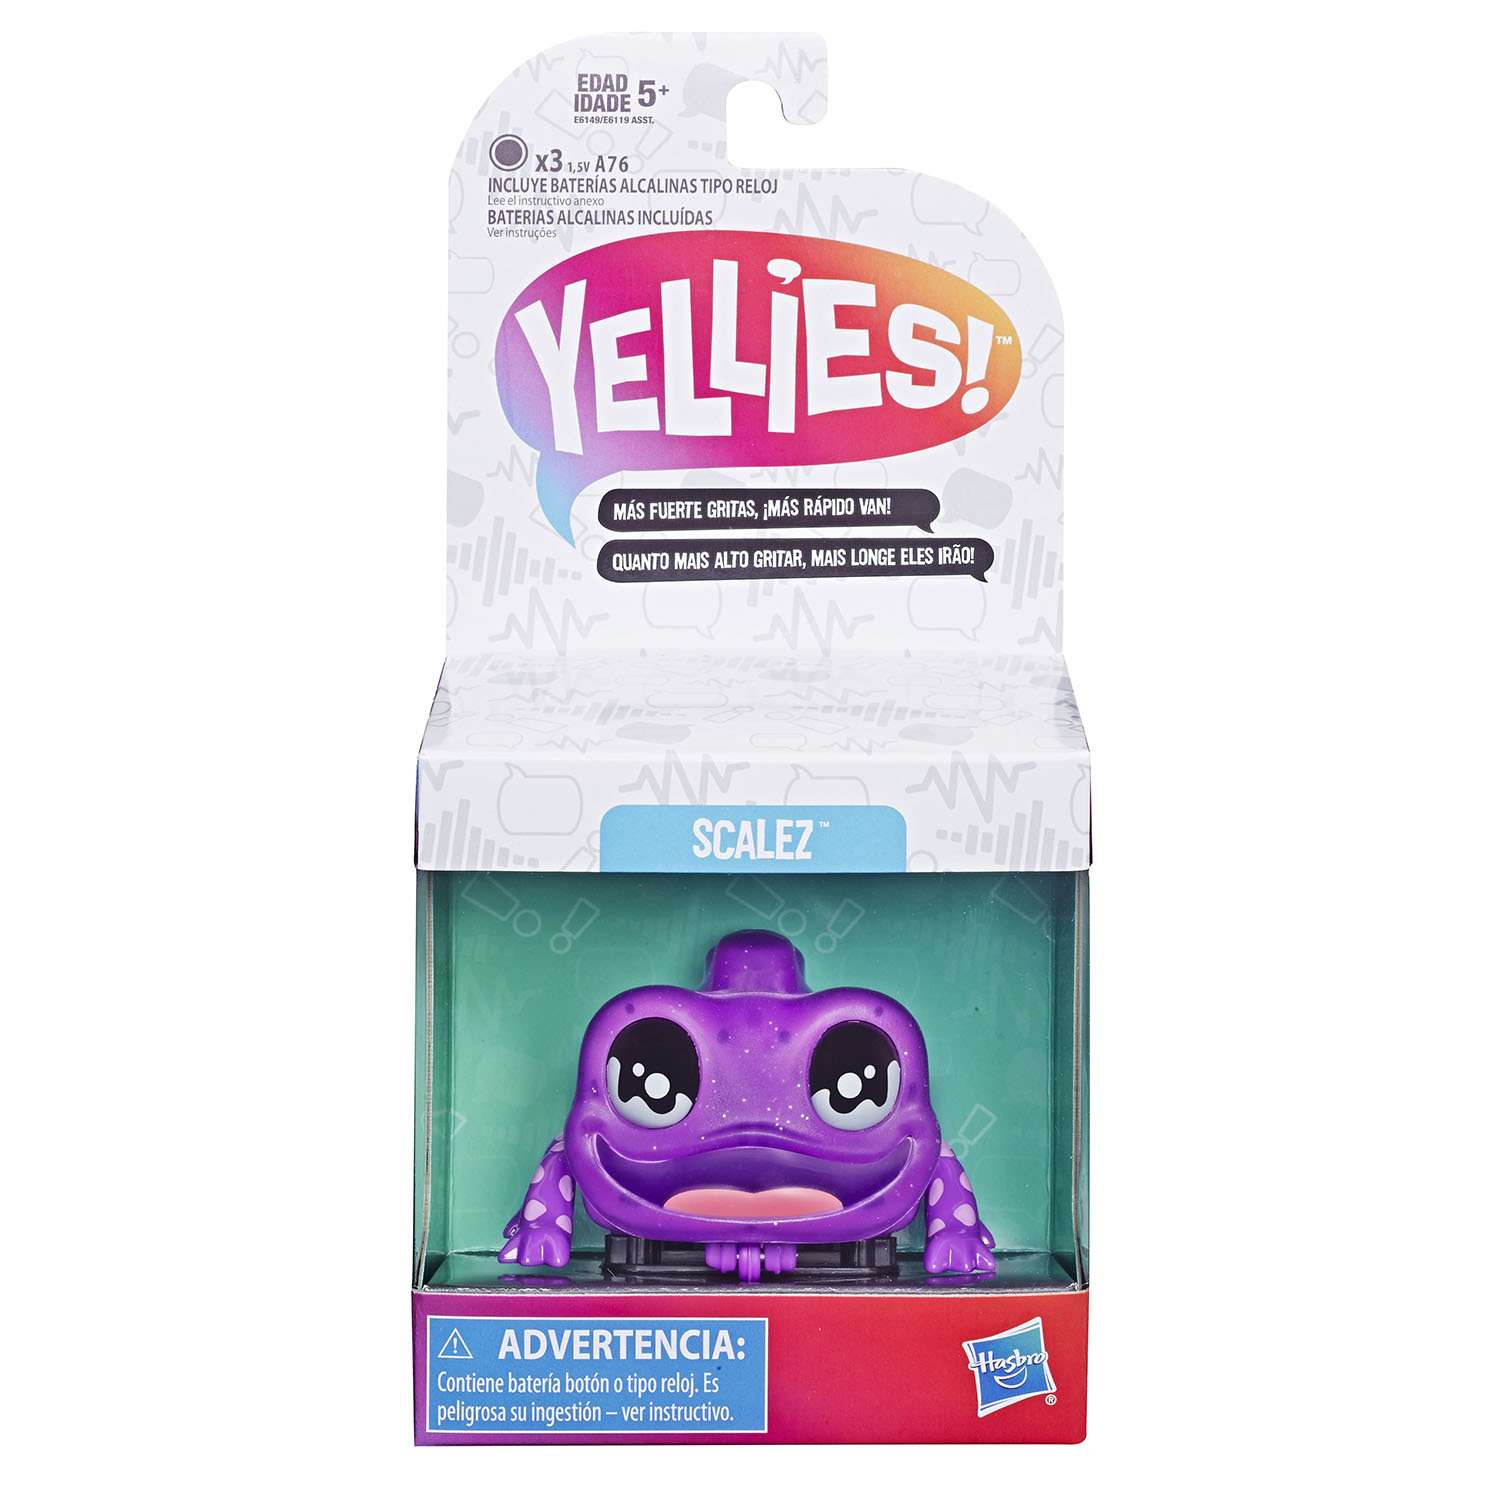 Игрушка Yellies (Yellies) Ящерица Скалез интерактивная E6149EU4 - фото 2